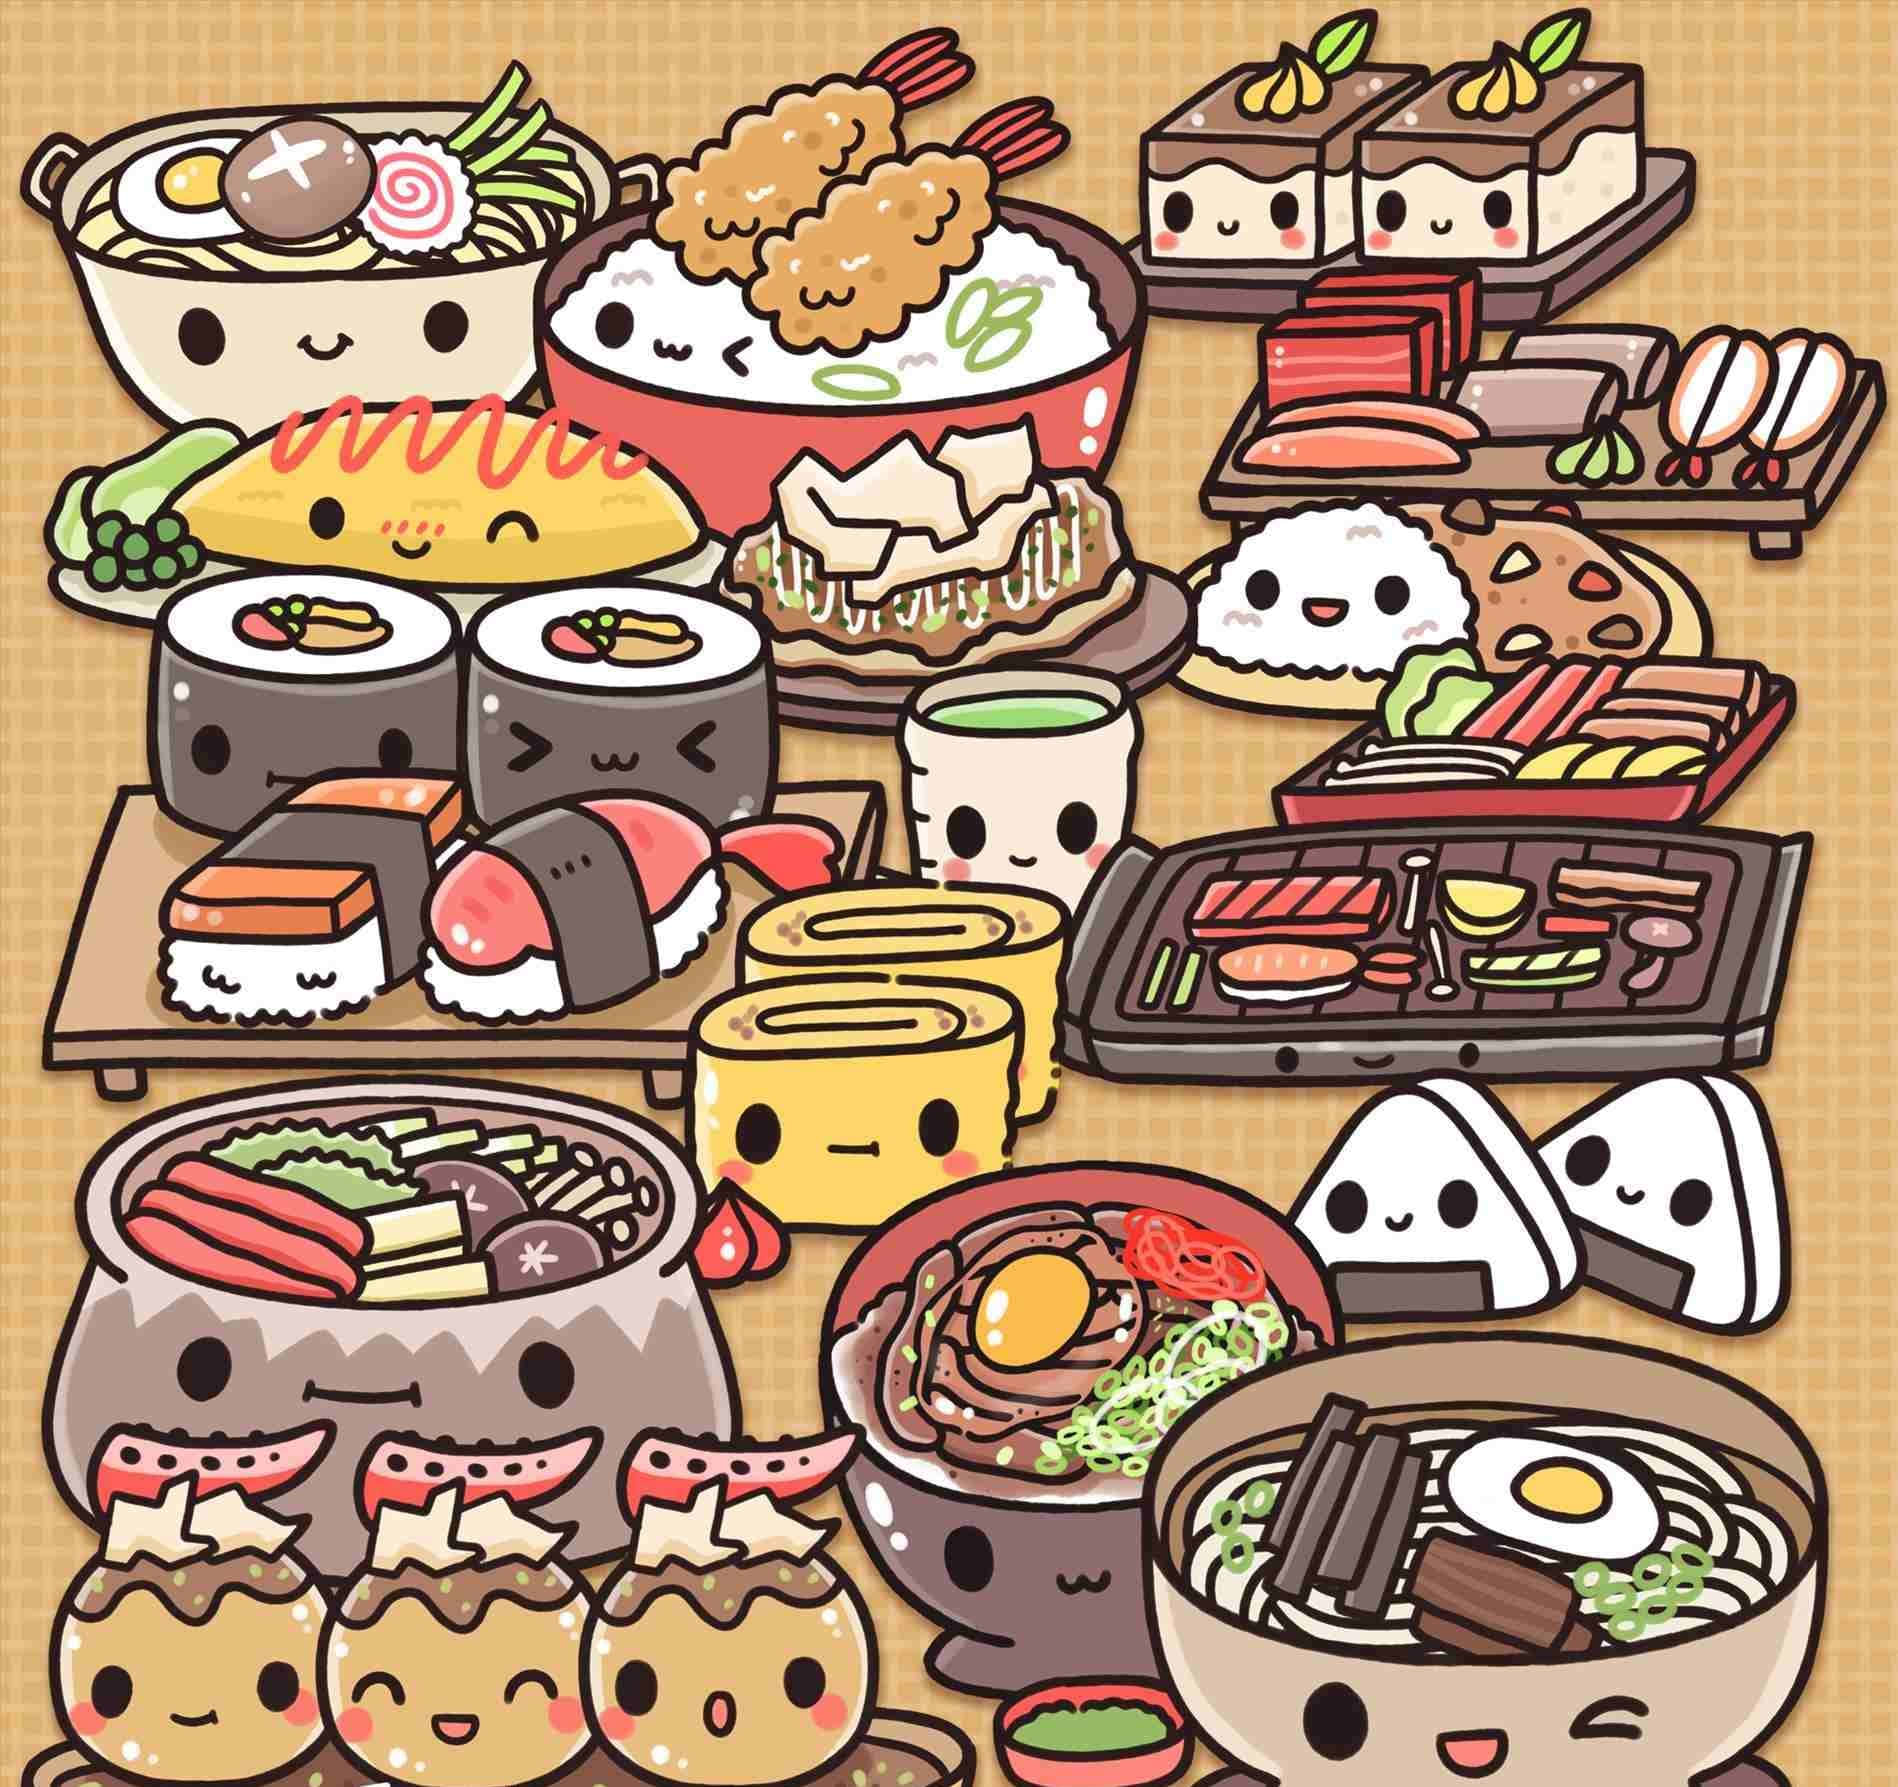 Caption: Cute and Colorful Kawaii Food Characters Wallpaper